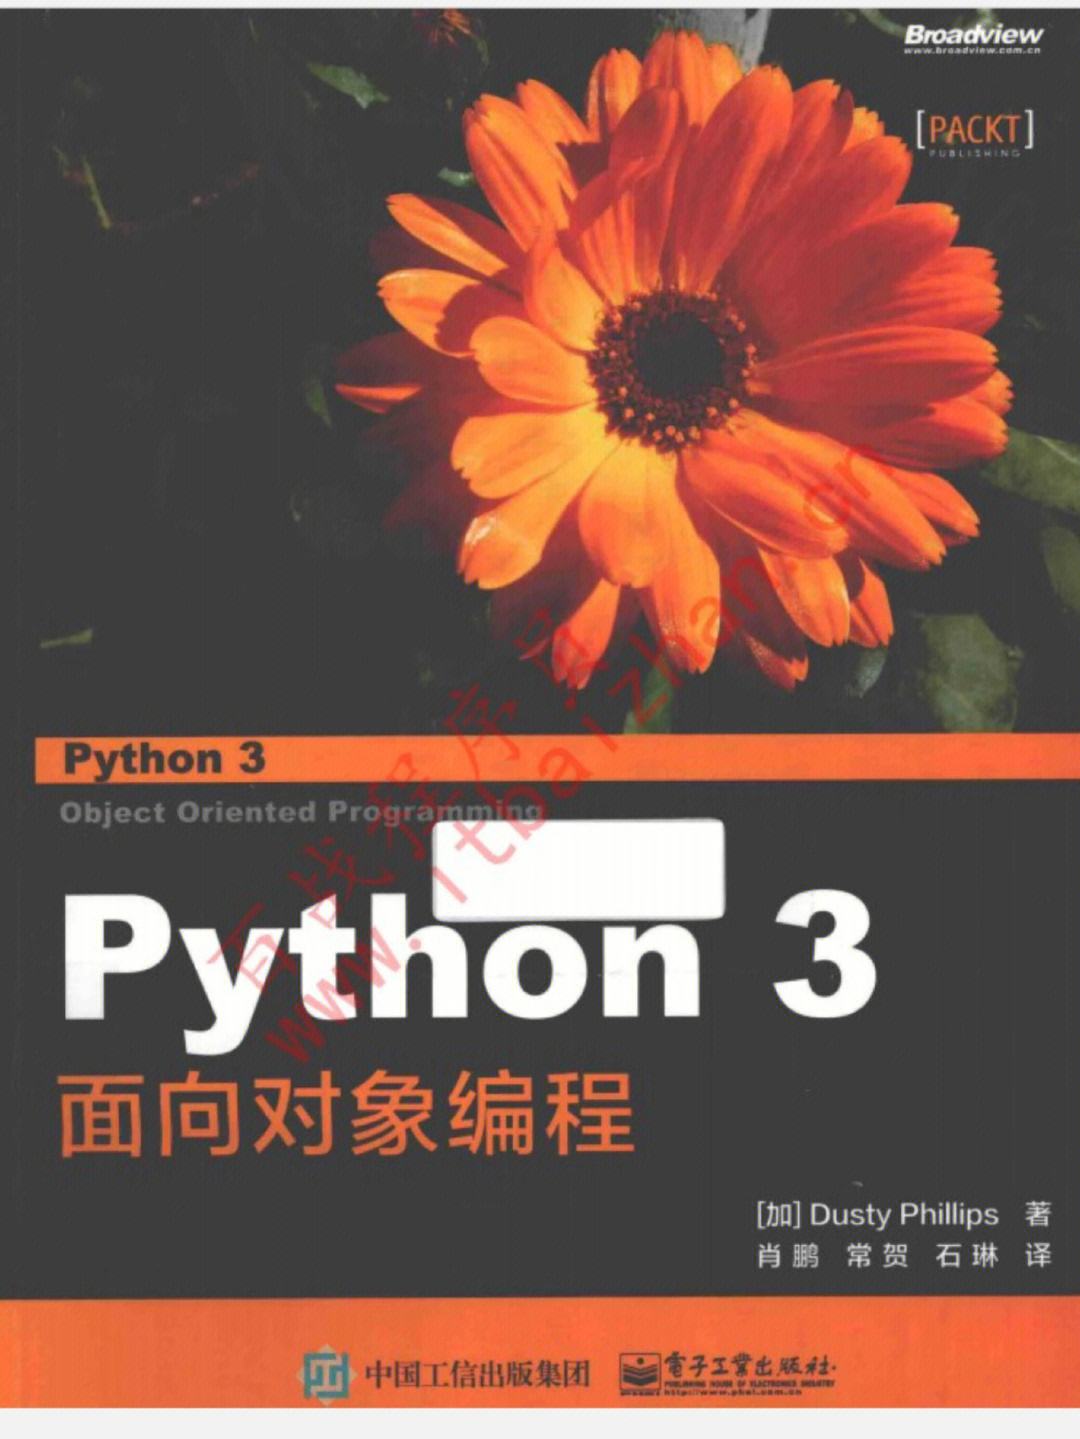 python3(python311怎么进入编程界面)